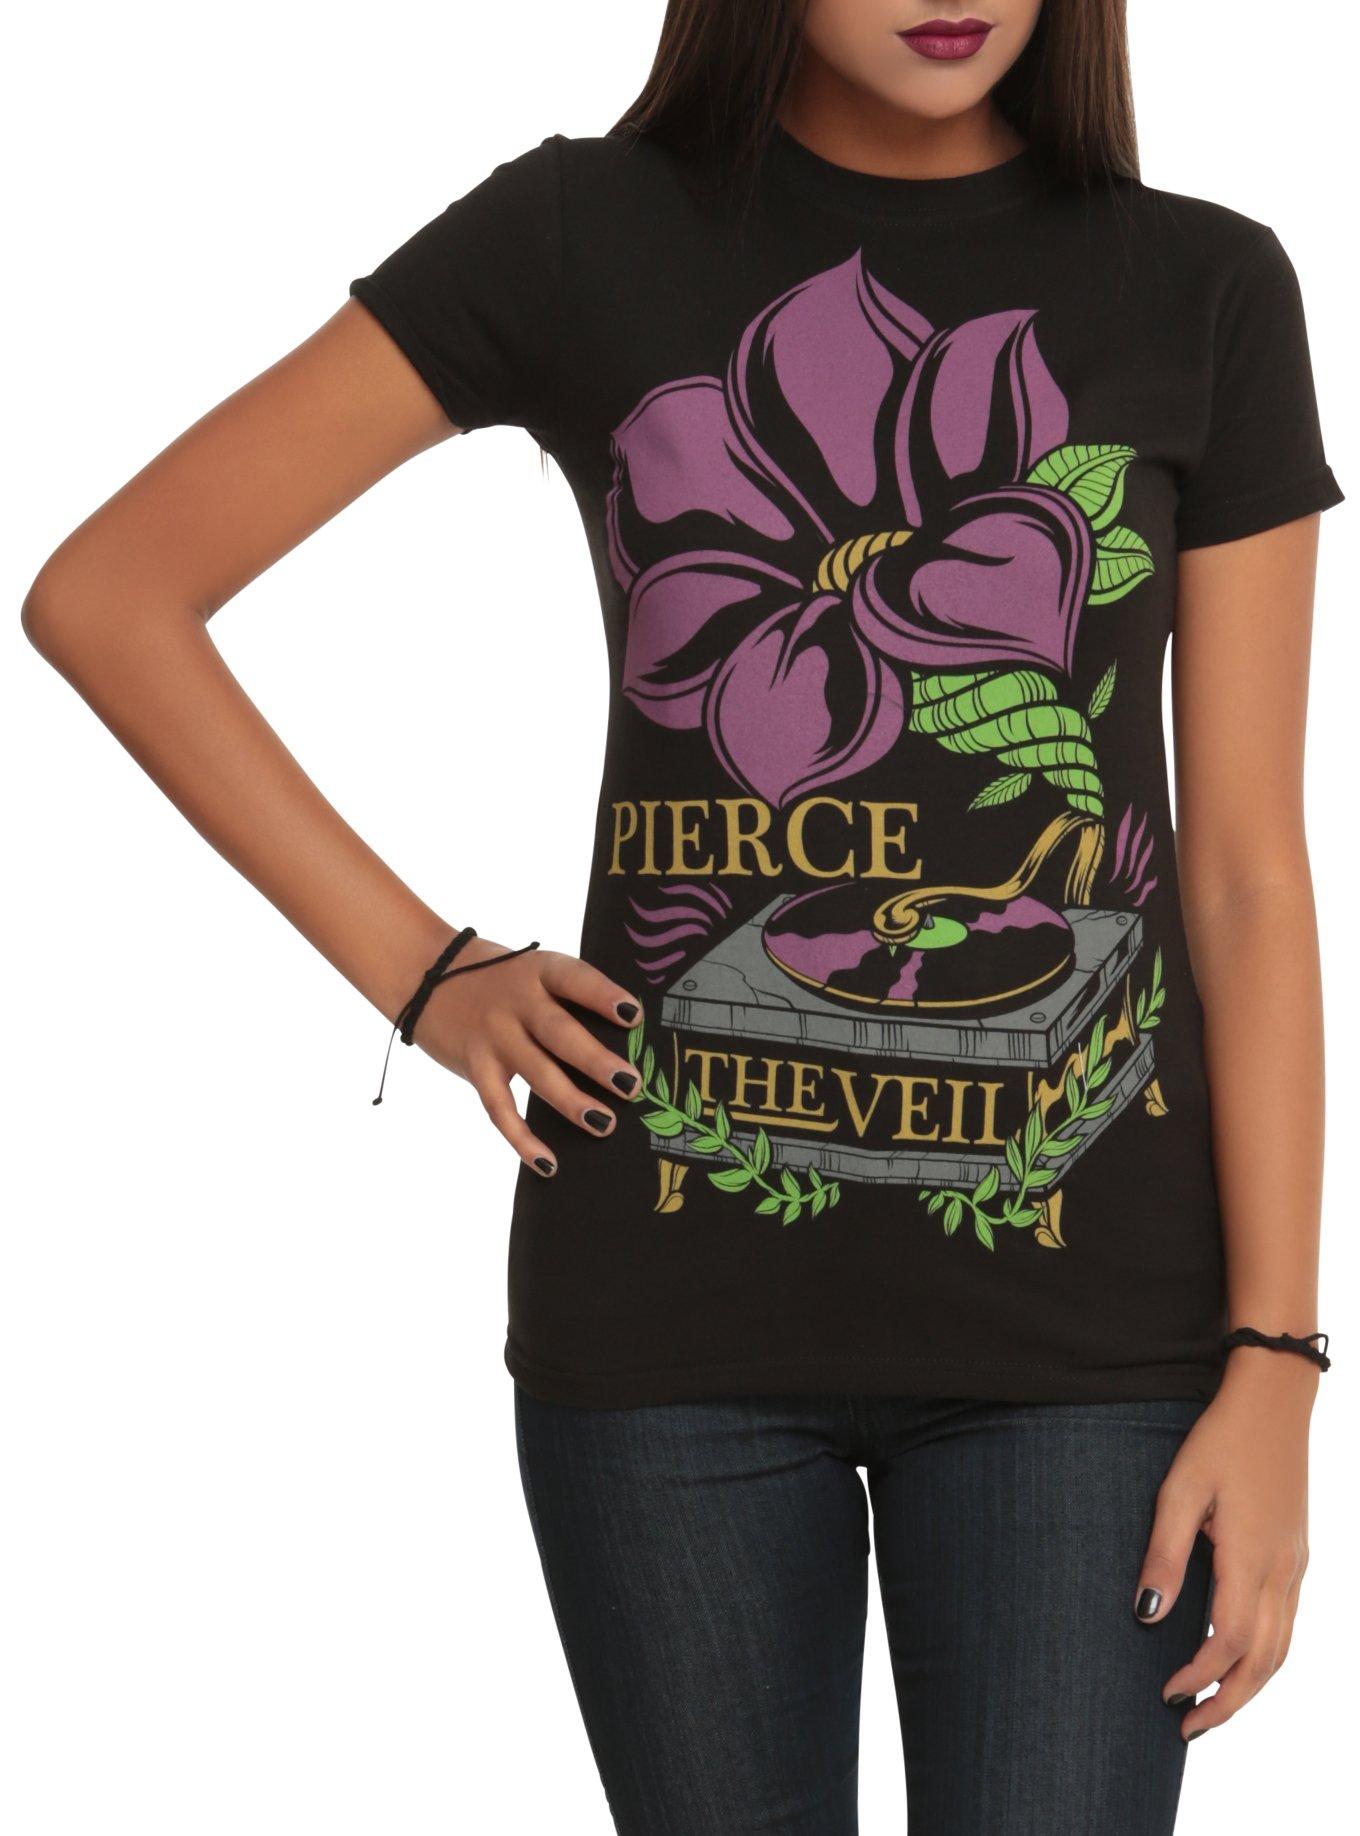 Pierce The Veil Flower Record Player Girls T-Shirt, BLACK, hi-res